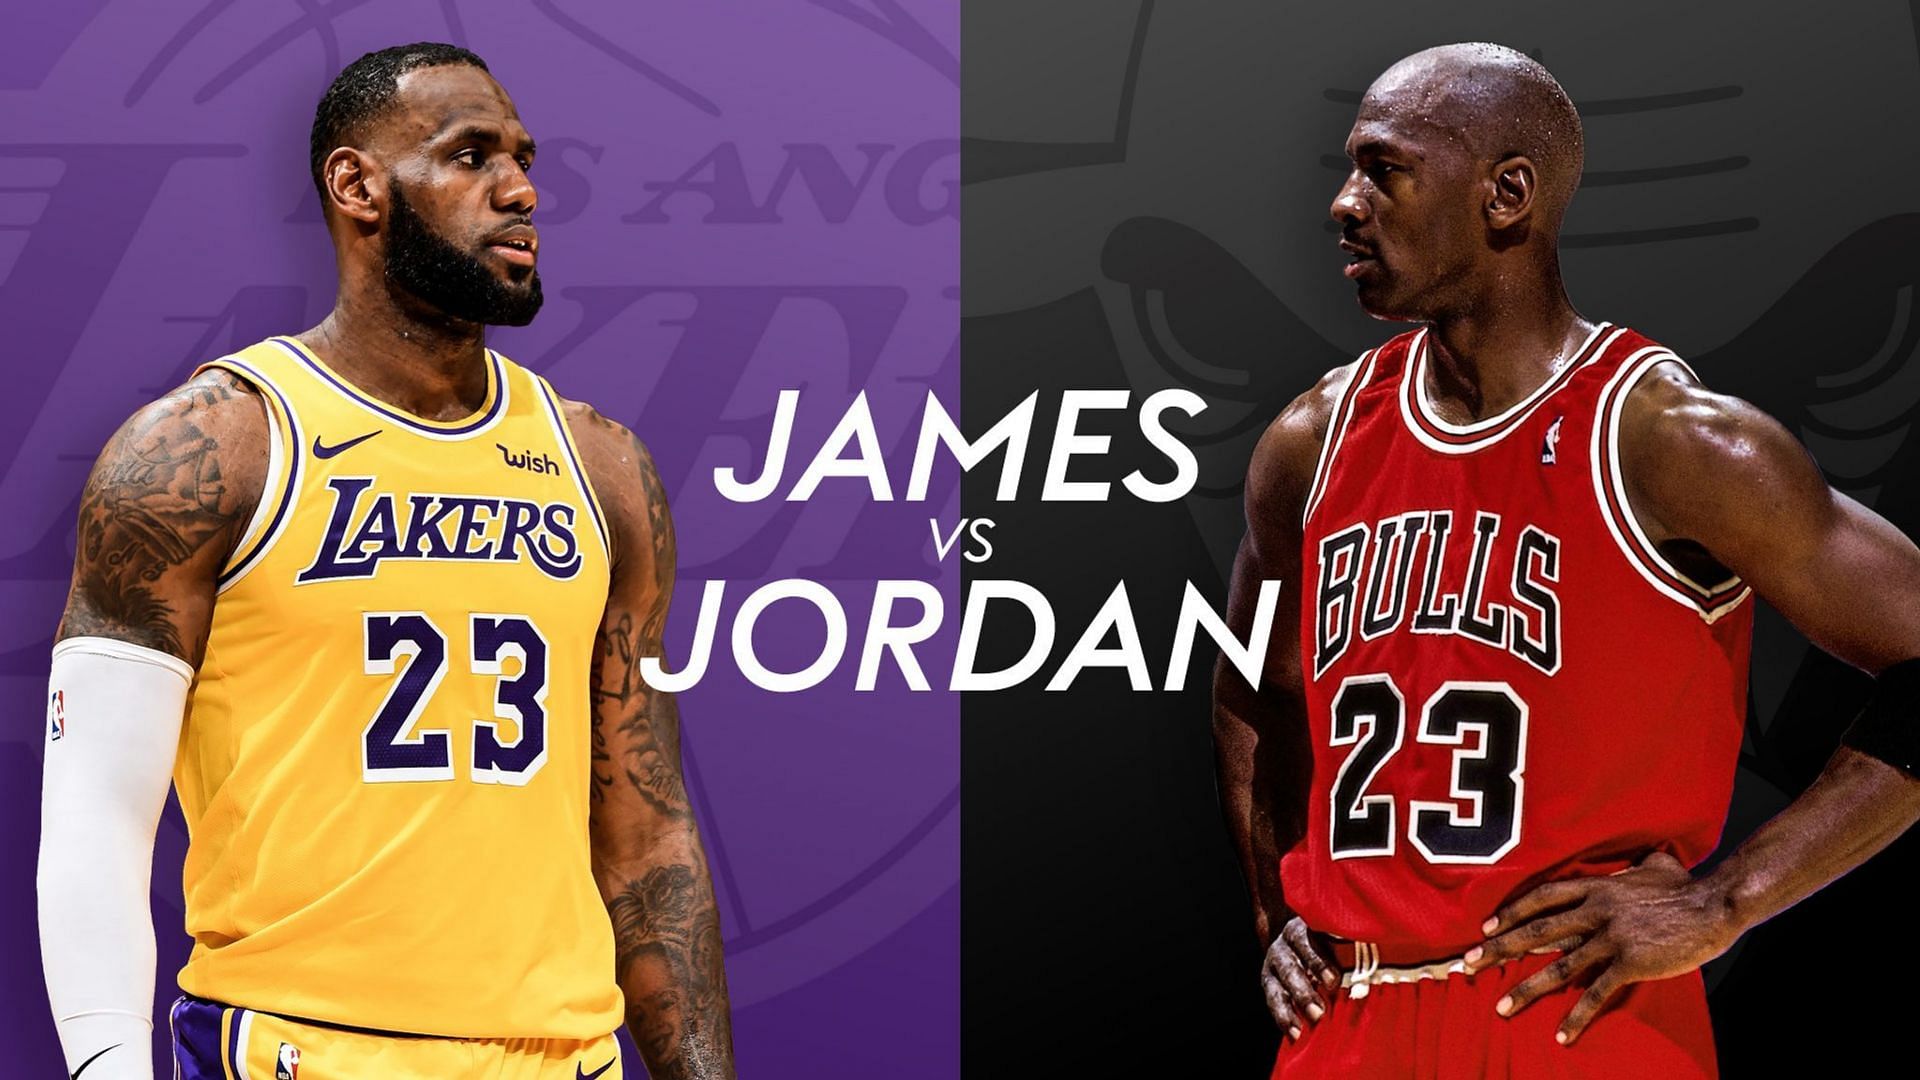 The LeBron James vs Michael Jordan GOAT debate is heating up. [Photo: Sky Sports]